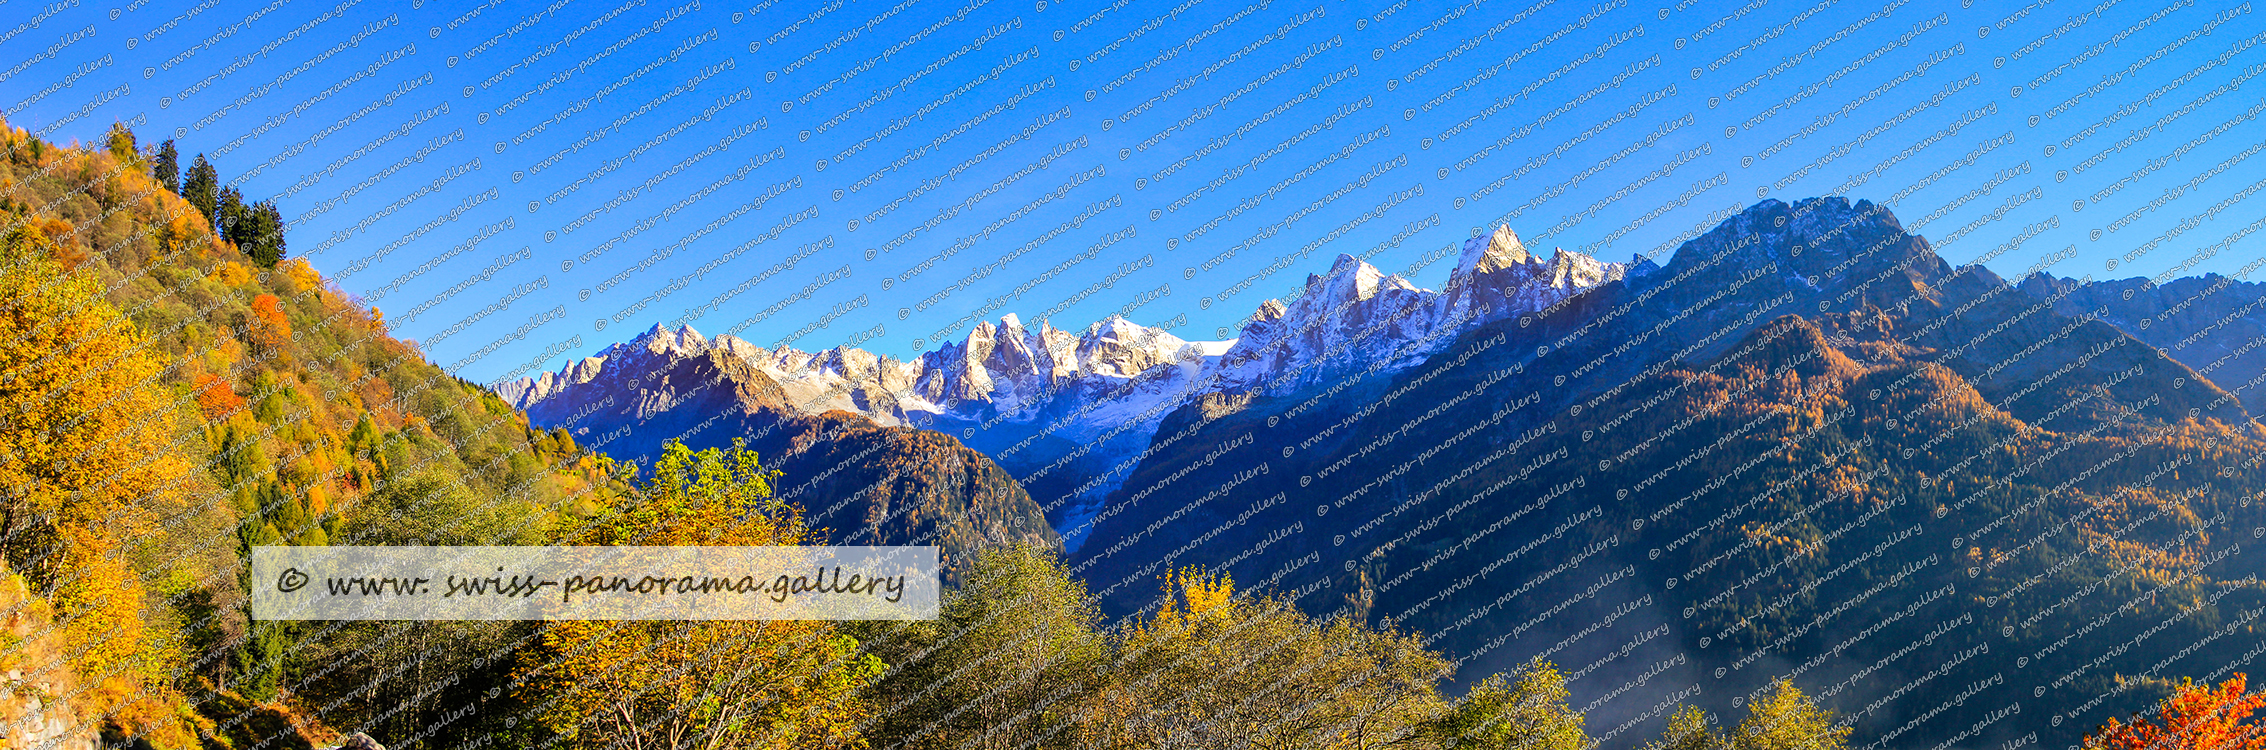 Schweizer Alpenpanorama, Bregaglia, Bergell Panorama von Soglioin Richtung Bondasca Tal swiss panorama.gallery